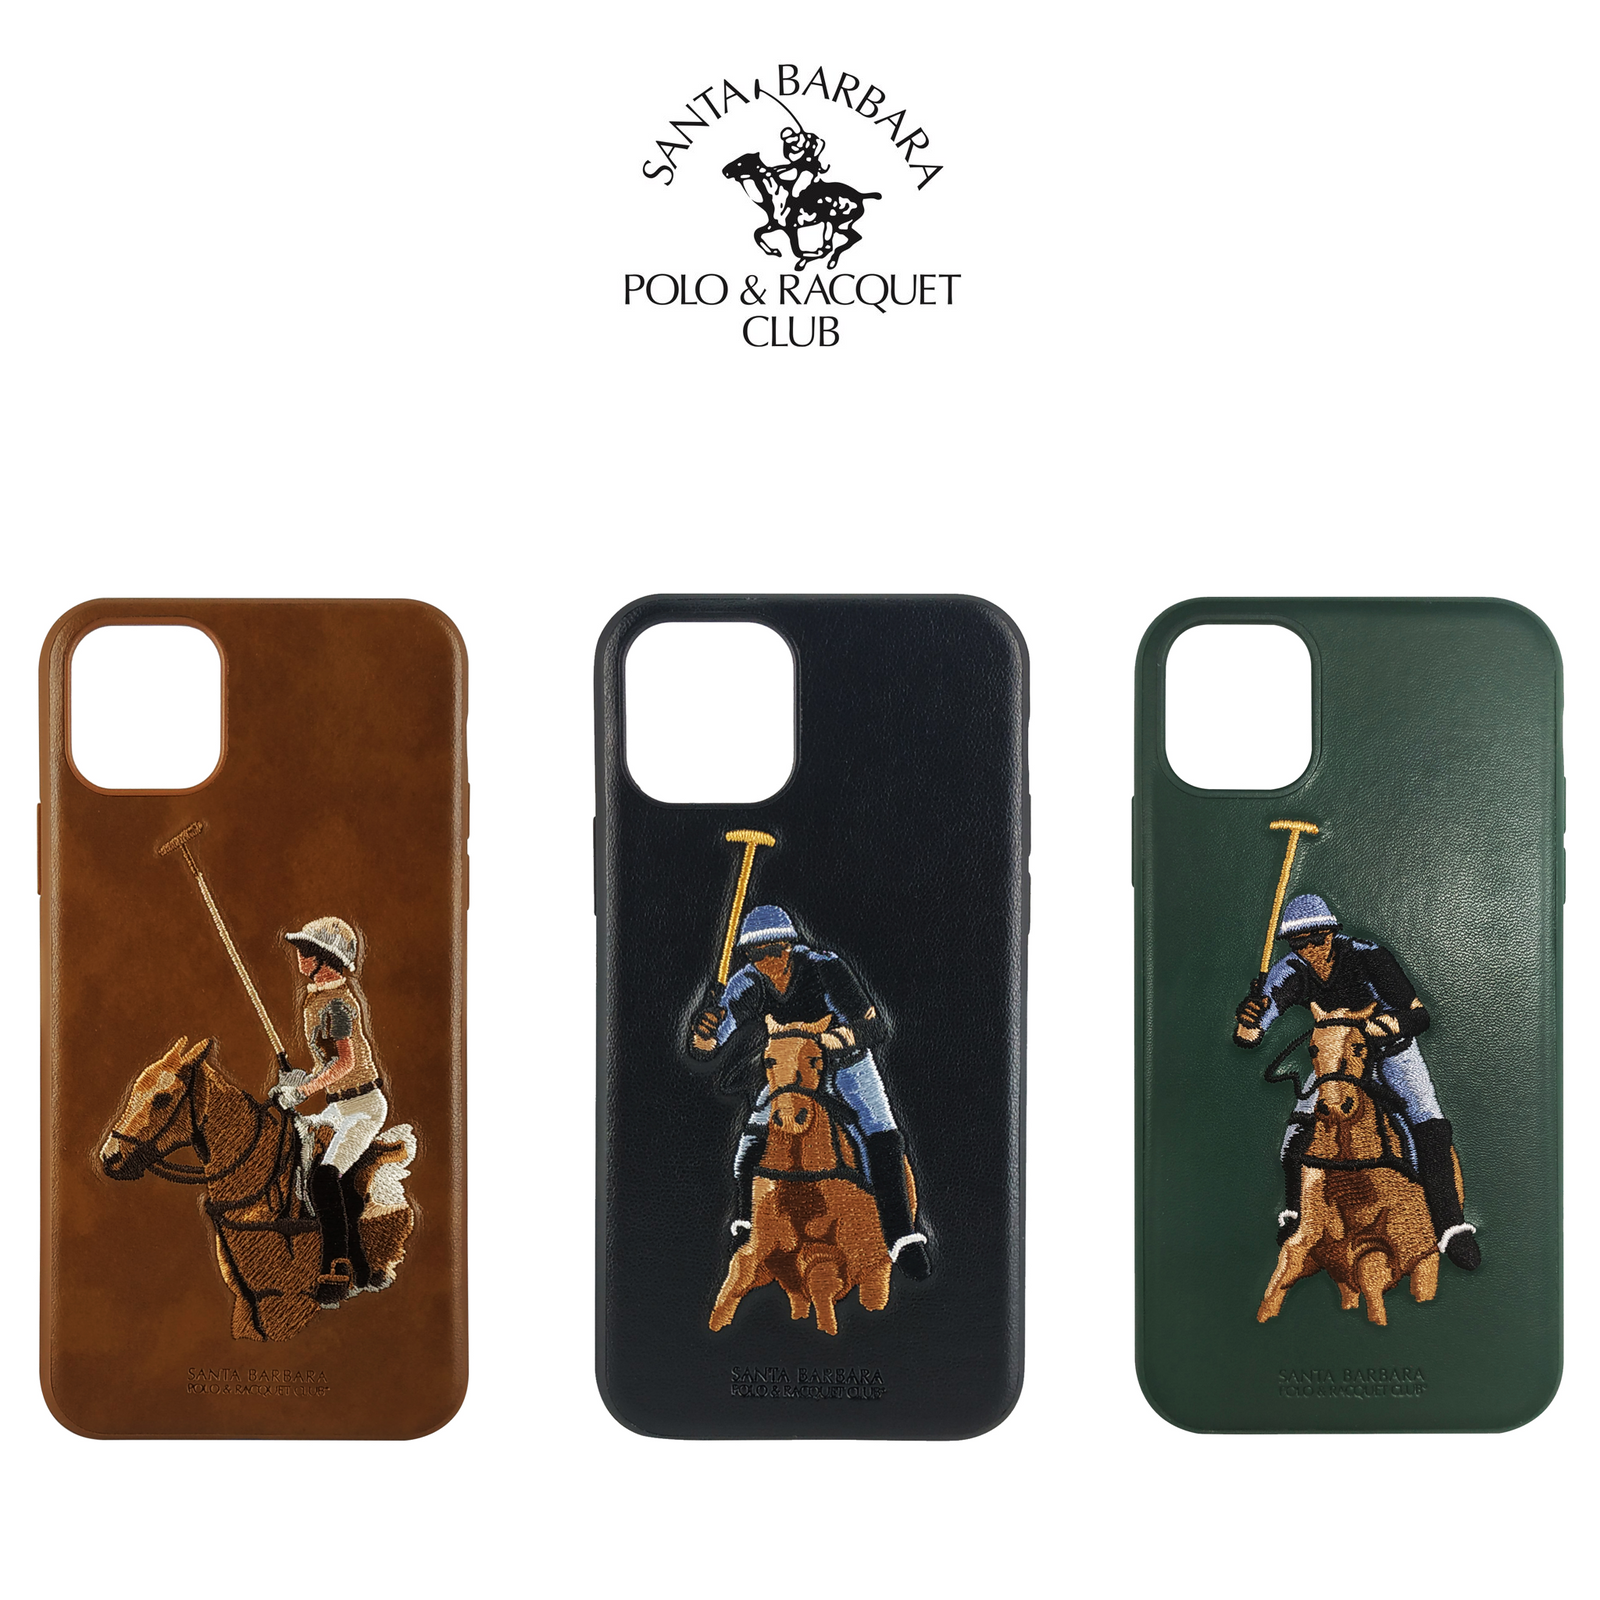 Santa Barbara Polo & Racquet Club Jockey Series Genuine Leather Case Cover for Apple iPhone 11 Pro Max 6.5"